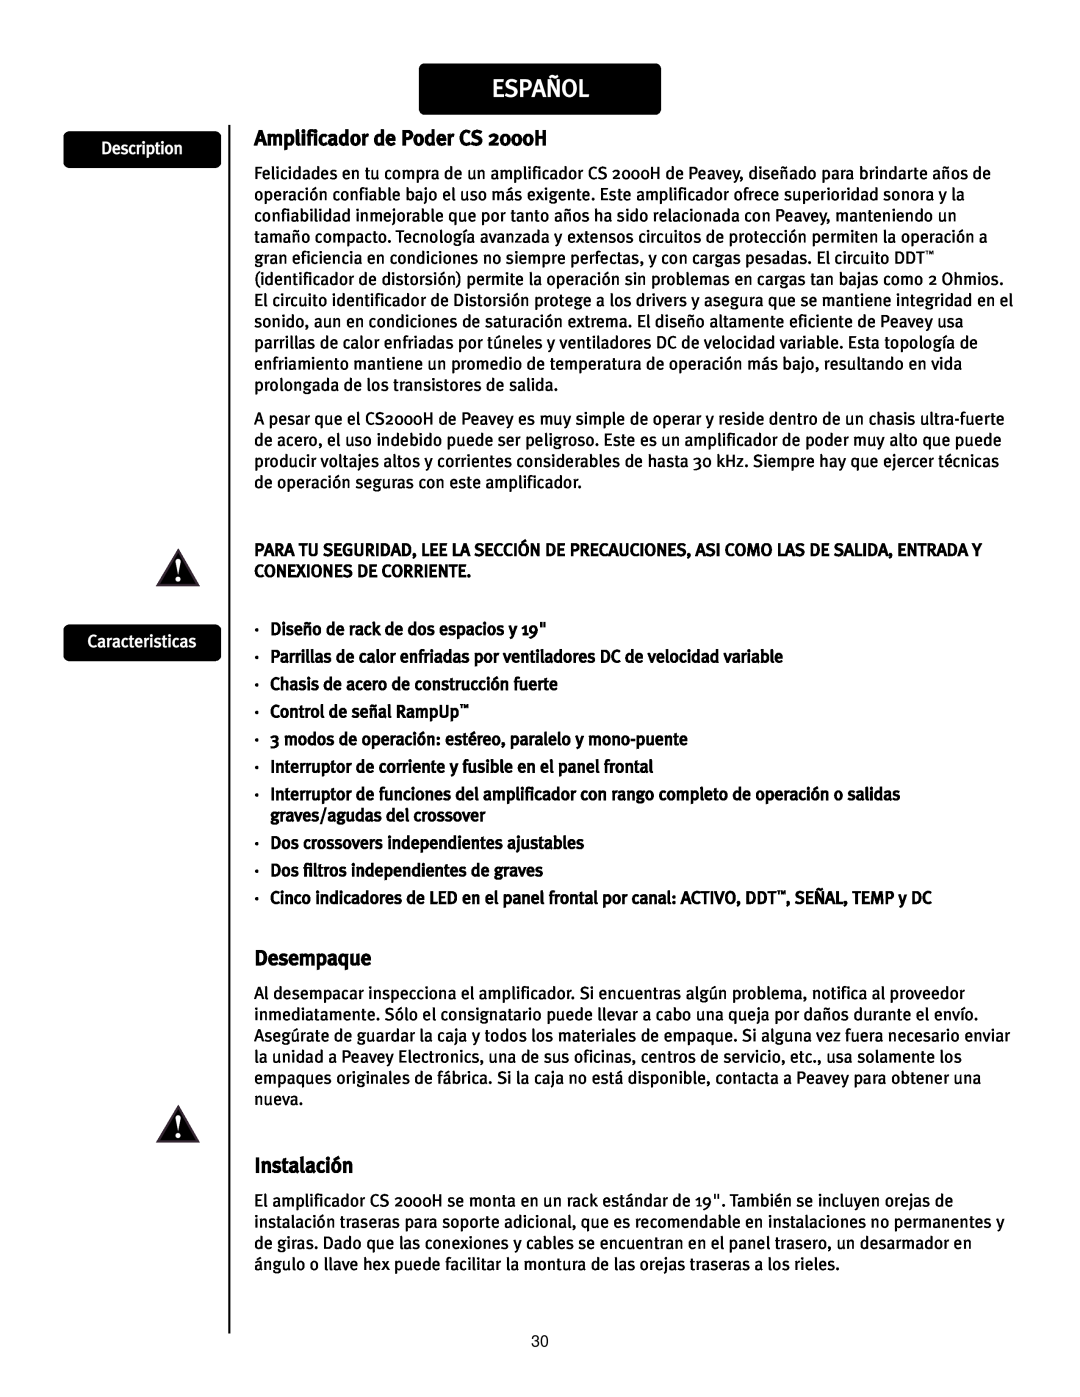 Peavey CS2000H manual Amplificador de Poder CS 2000H, Desempaque, Instalación, Español, Description Caracteristicas 